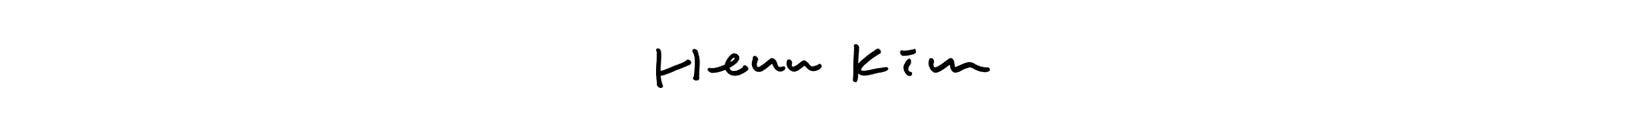 Henn Kim sign